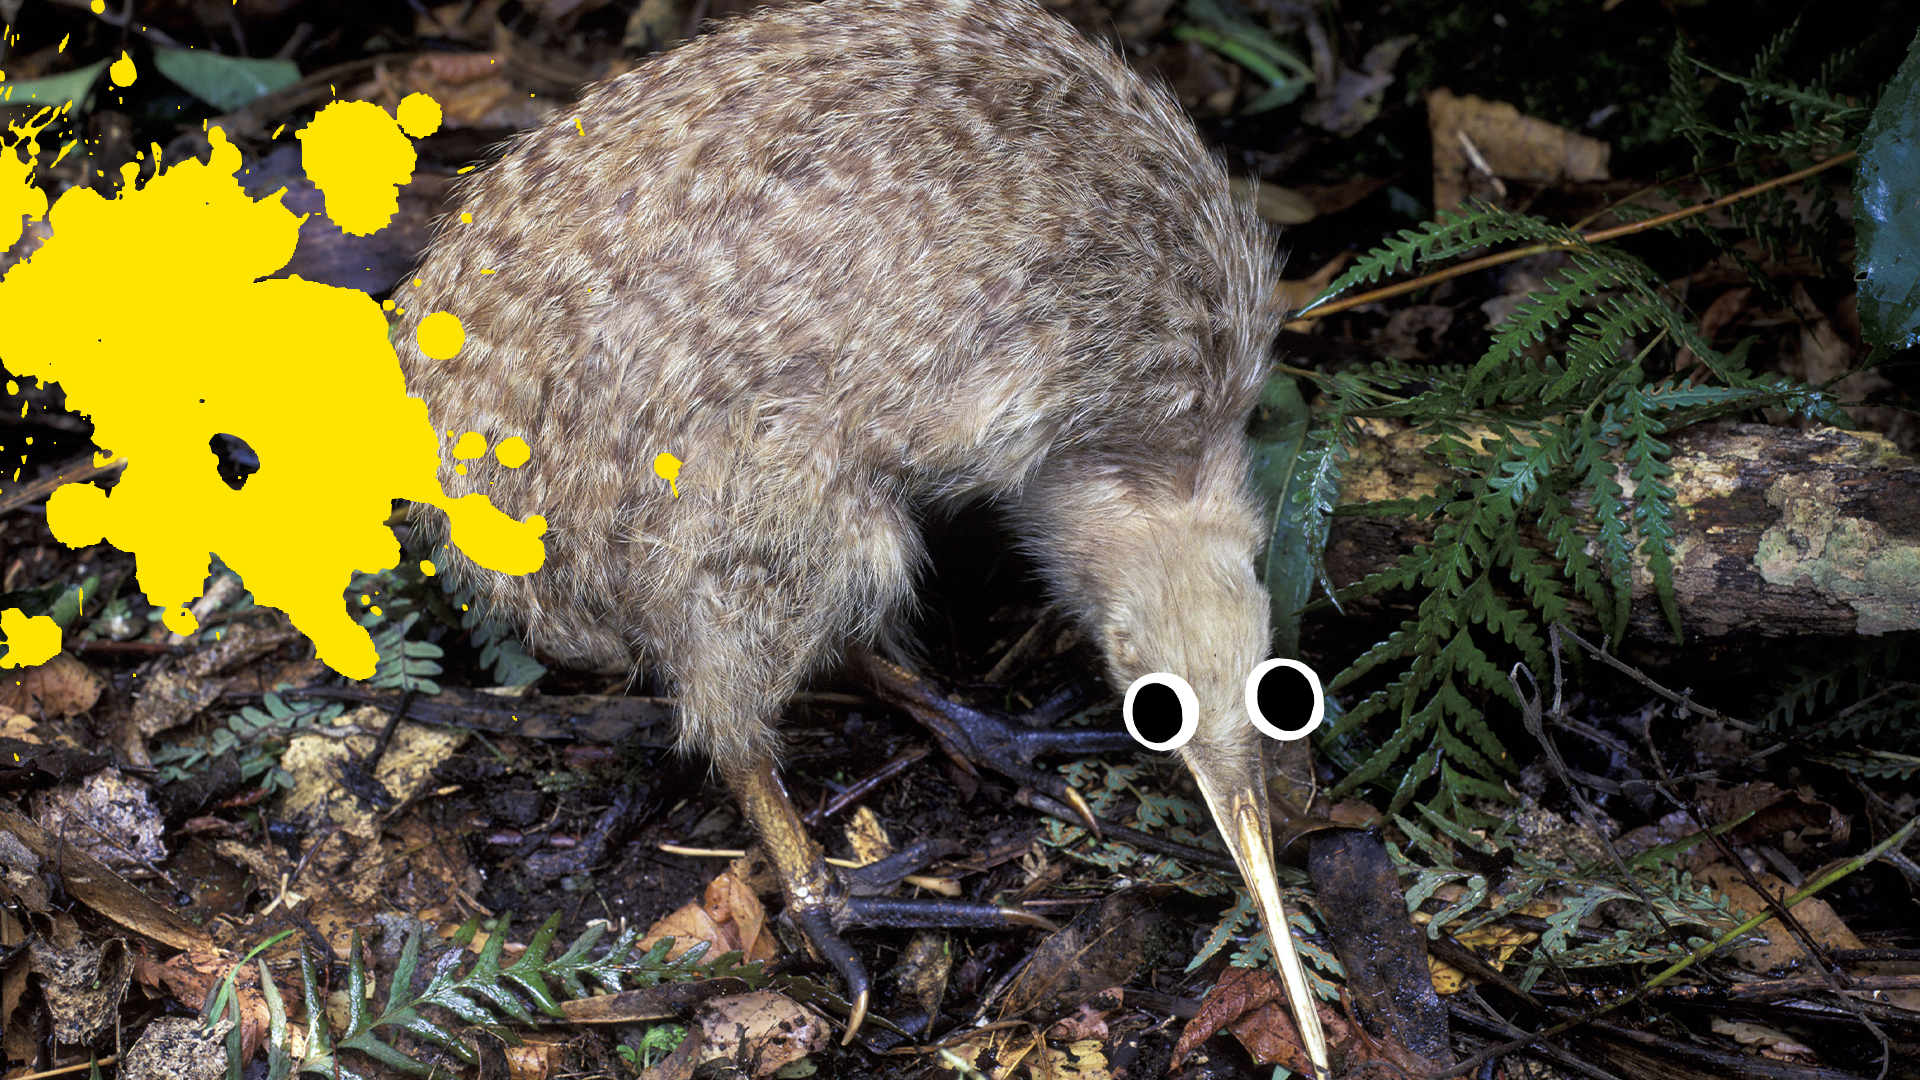 Kiwi bird with googly eyes and splat